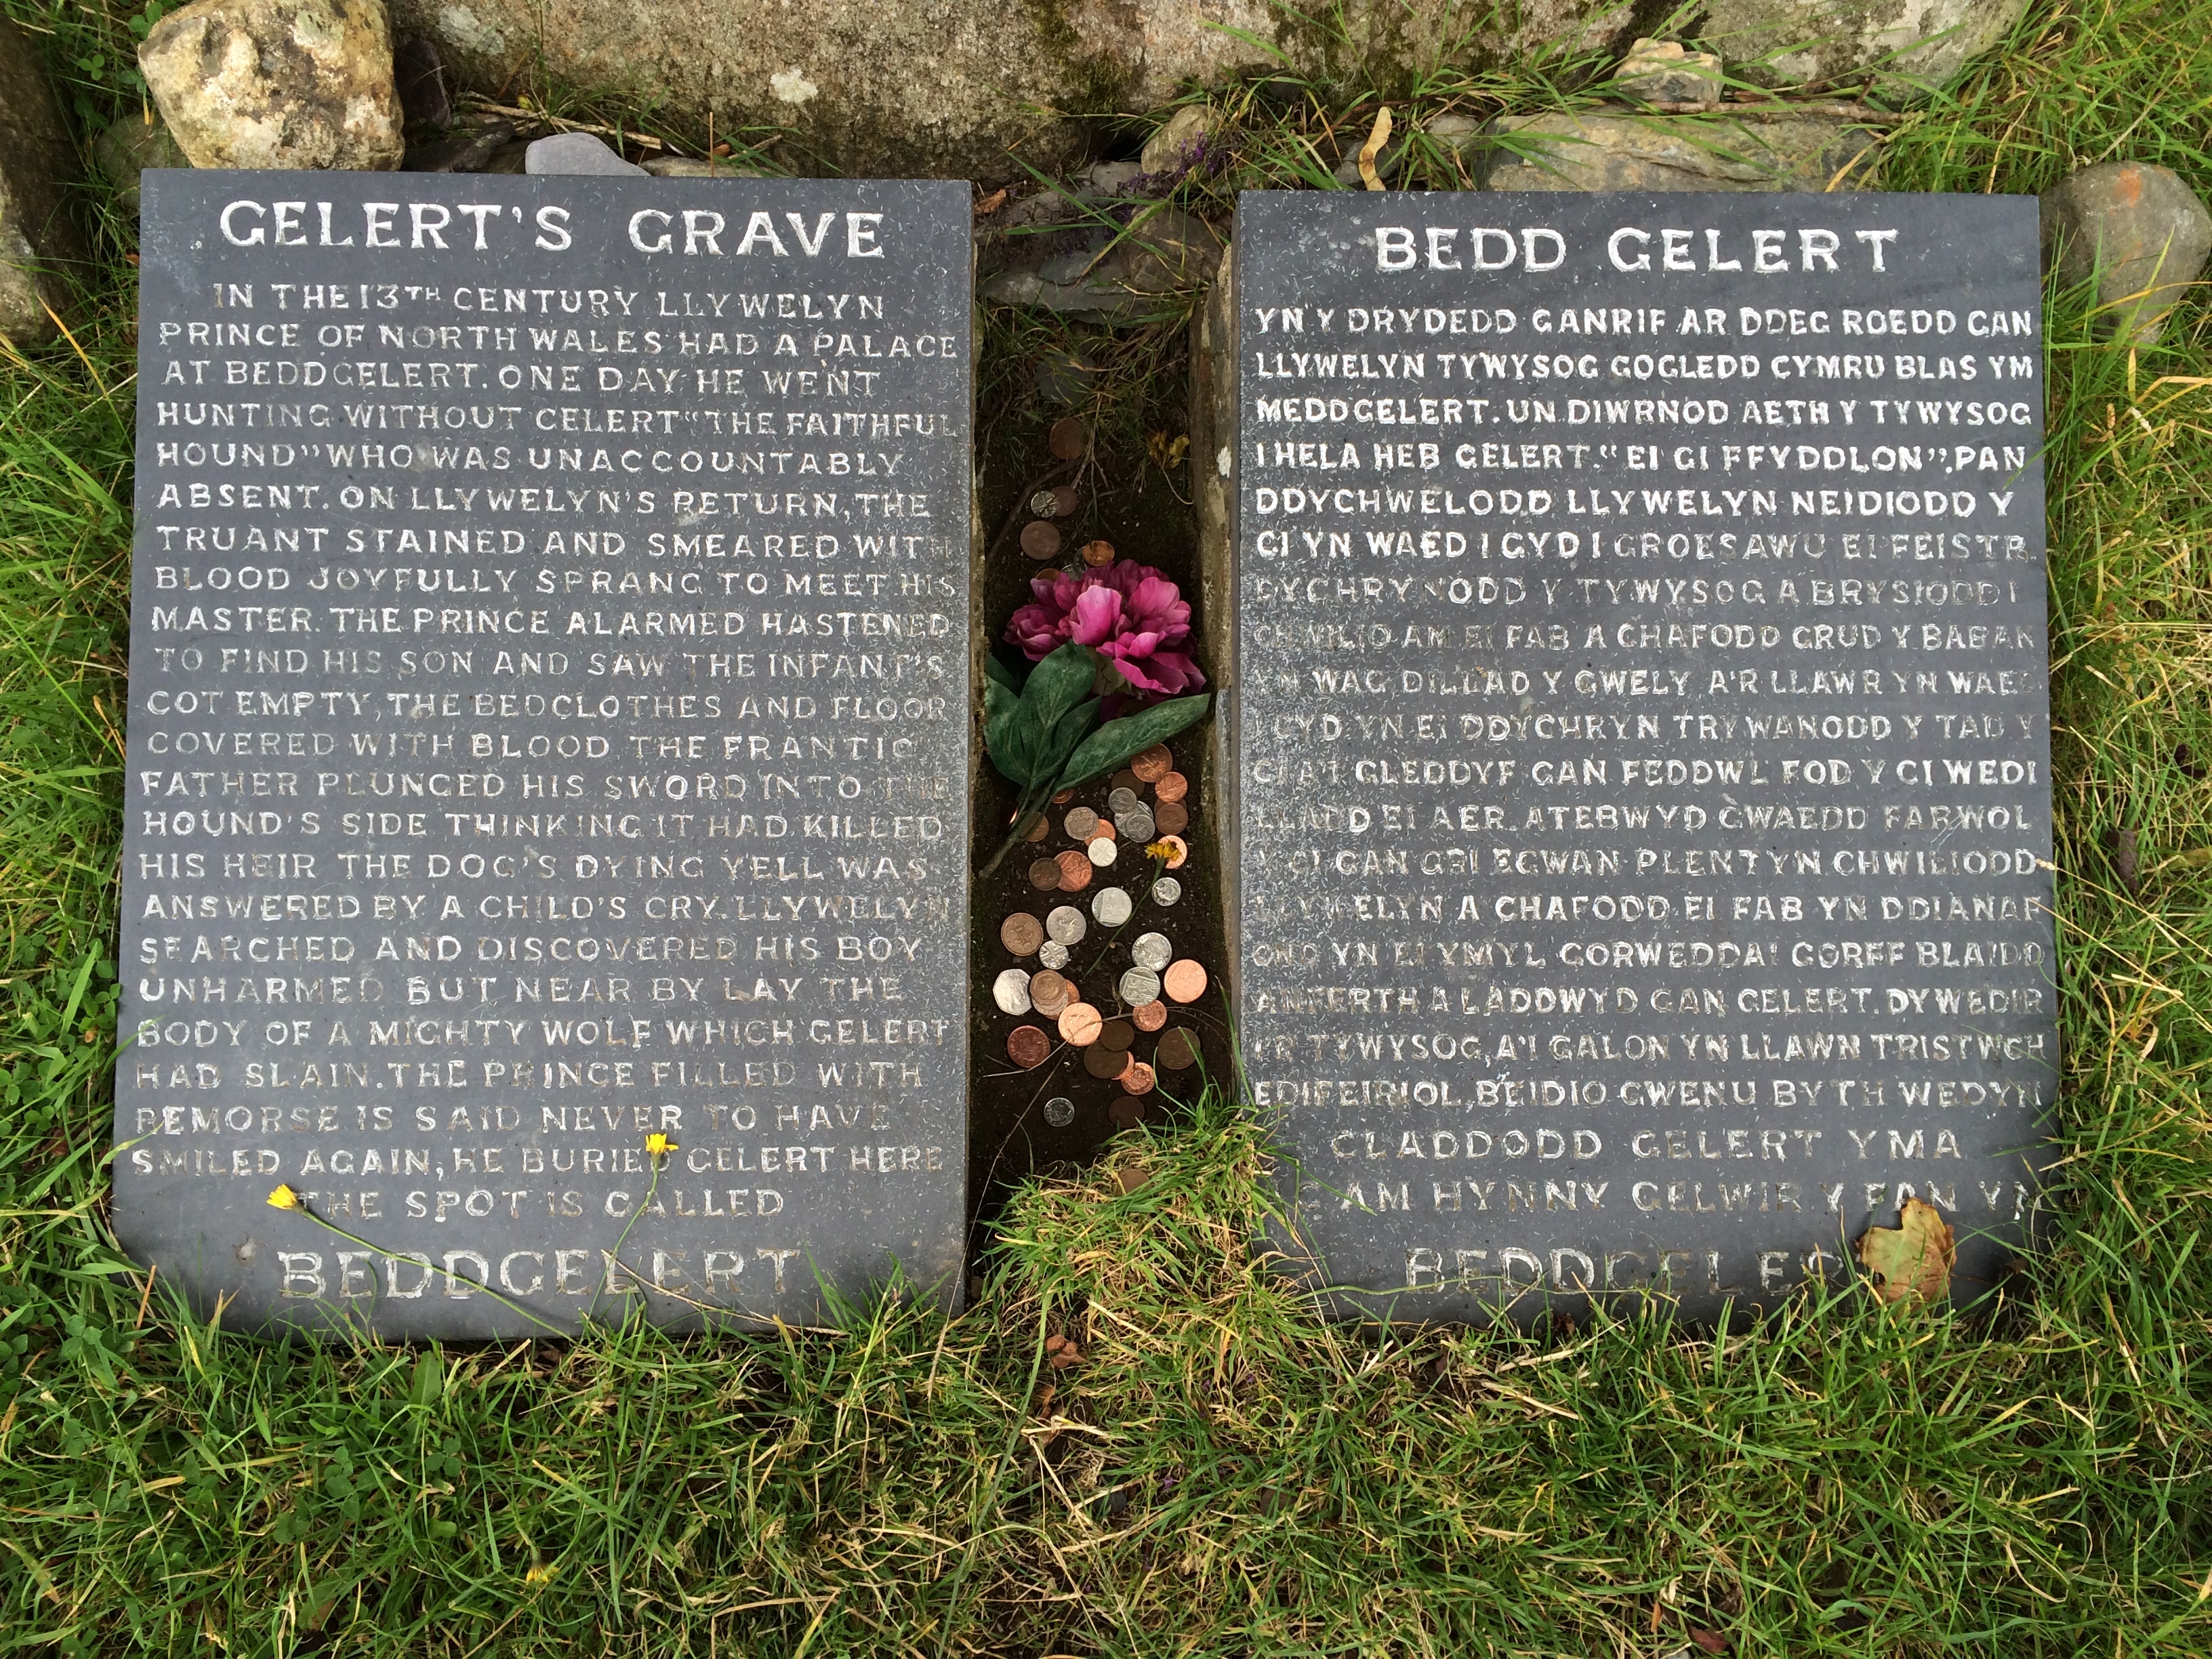 Gelert’s Grave plaques - image care of Robert Brook public domain.
